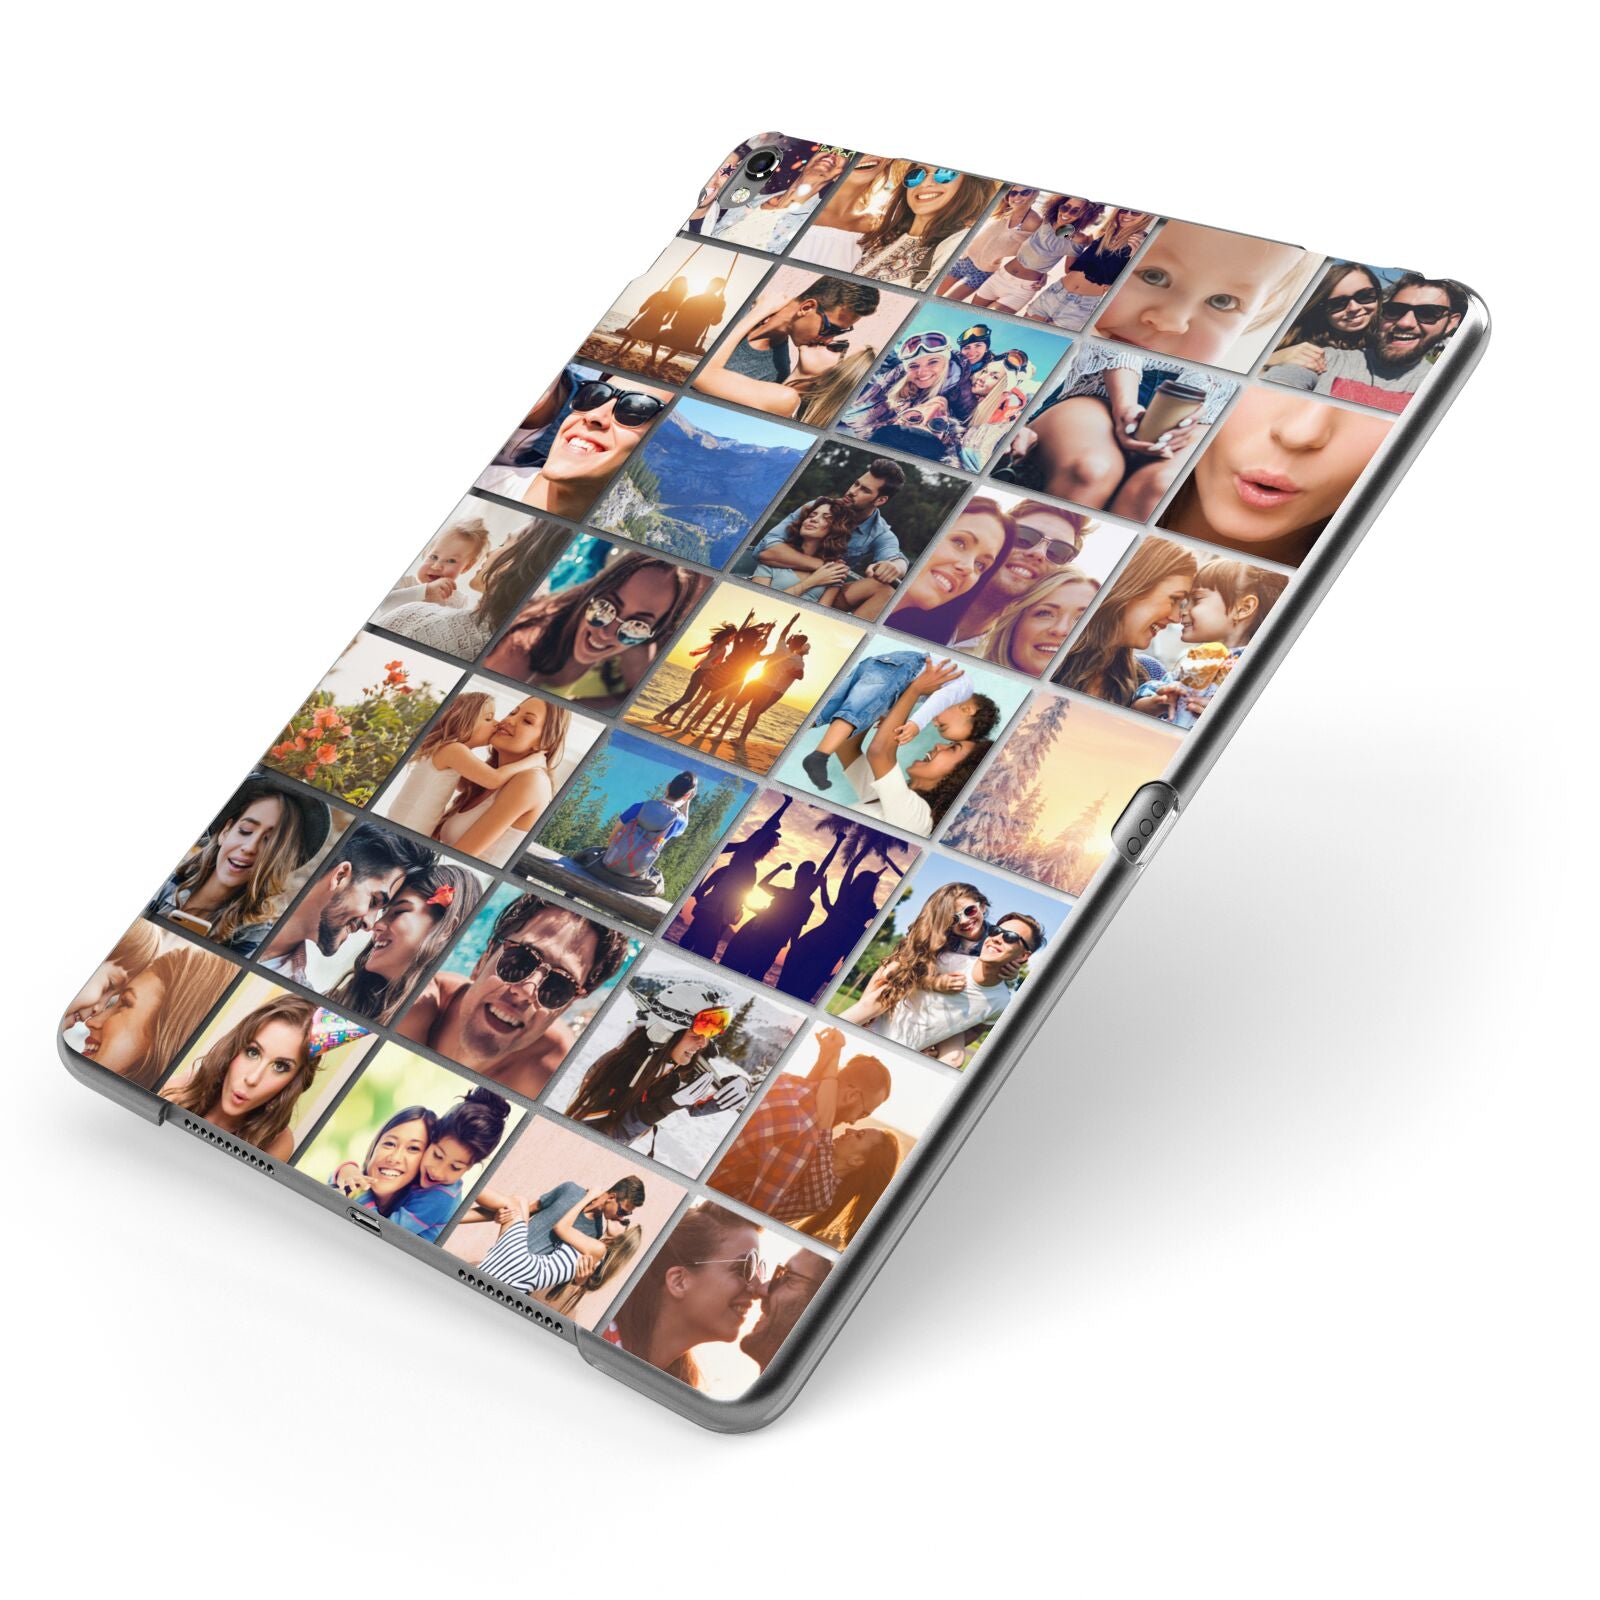 Ultimate Photo Montage Upload Apple iPad Case on Grey iPad Side View